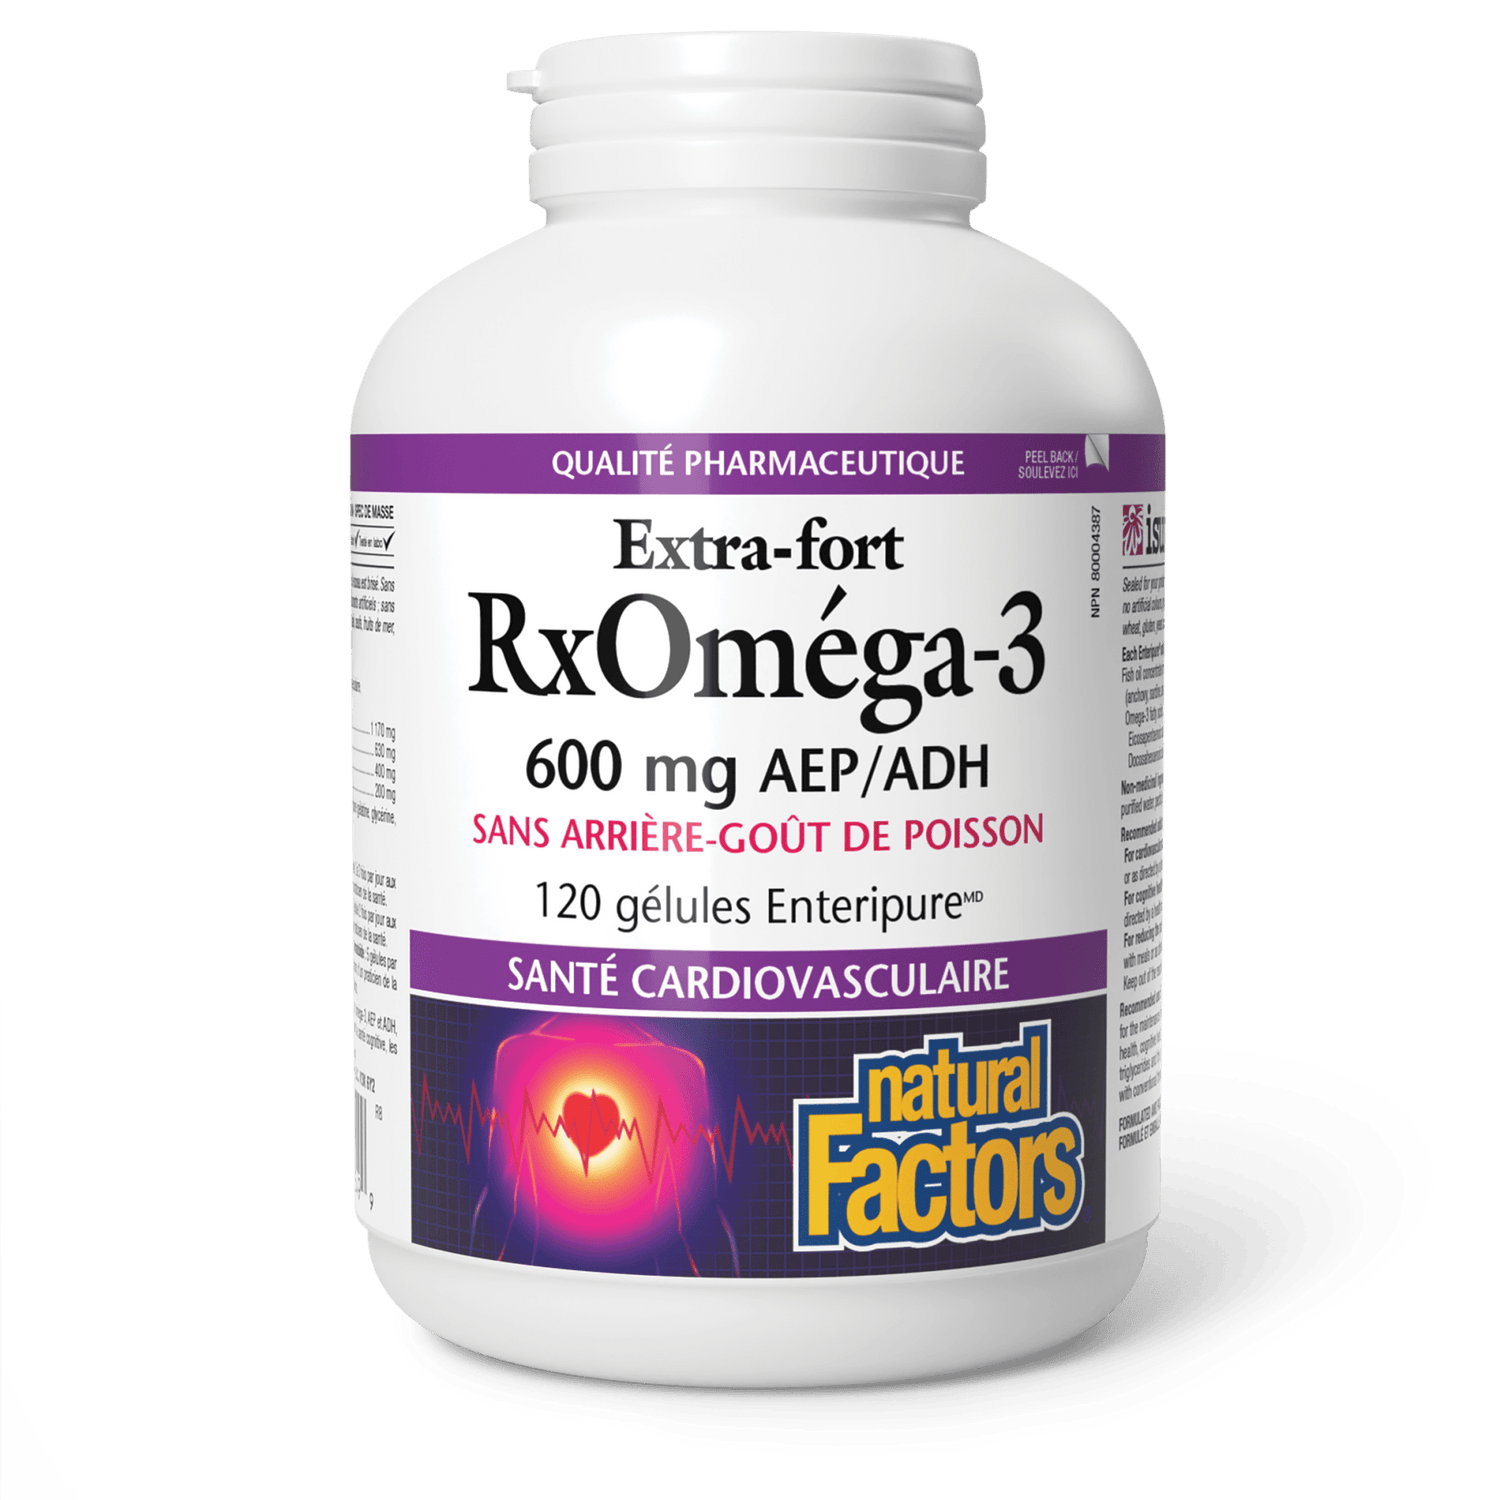 RxOméga-3 Extra-fort 600 mg, Natural Factors|v|image|3549